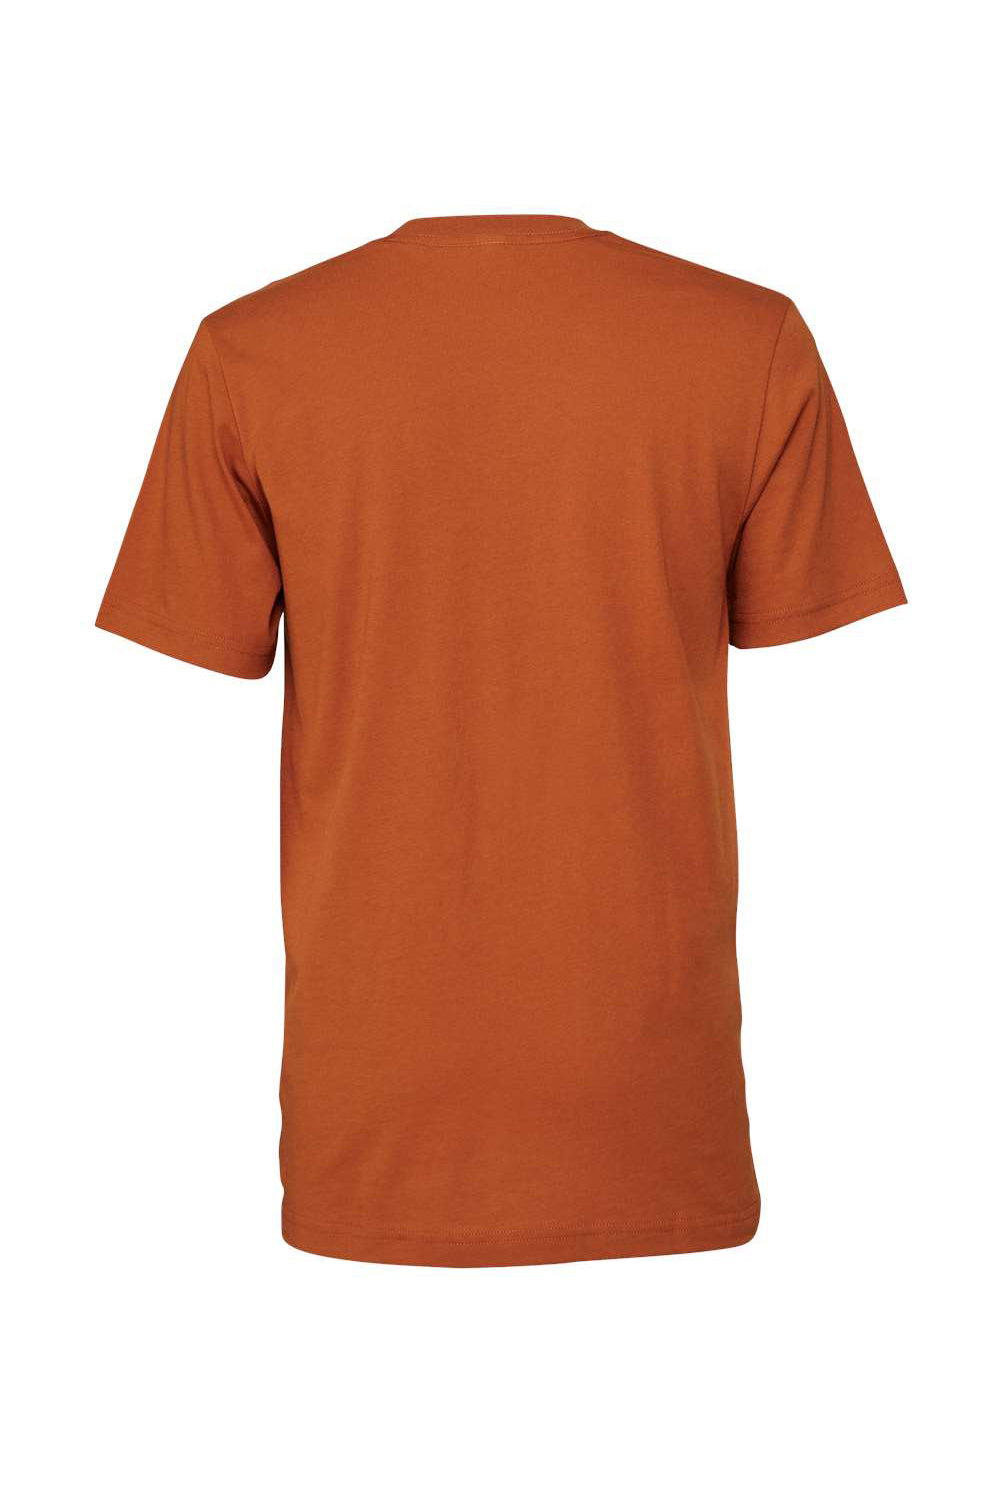 Bella + Canvas BC3001/3001C Mens Jersey Short Sleeve Crewneck T-Shirt Autumn Orange Flat Back